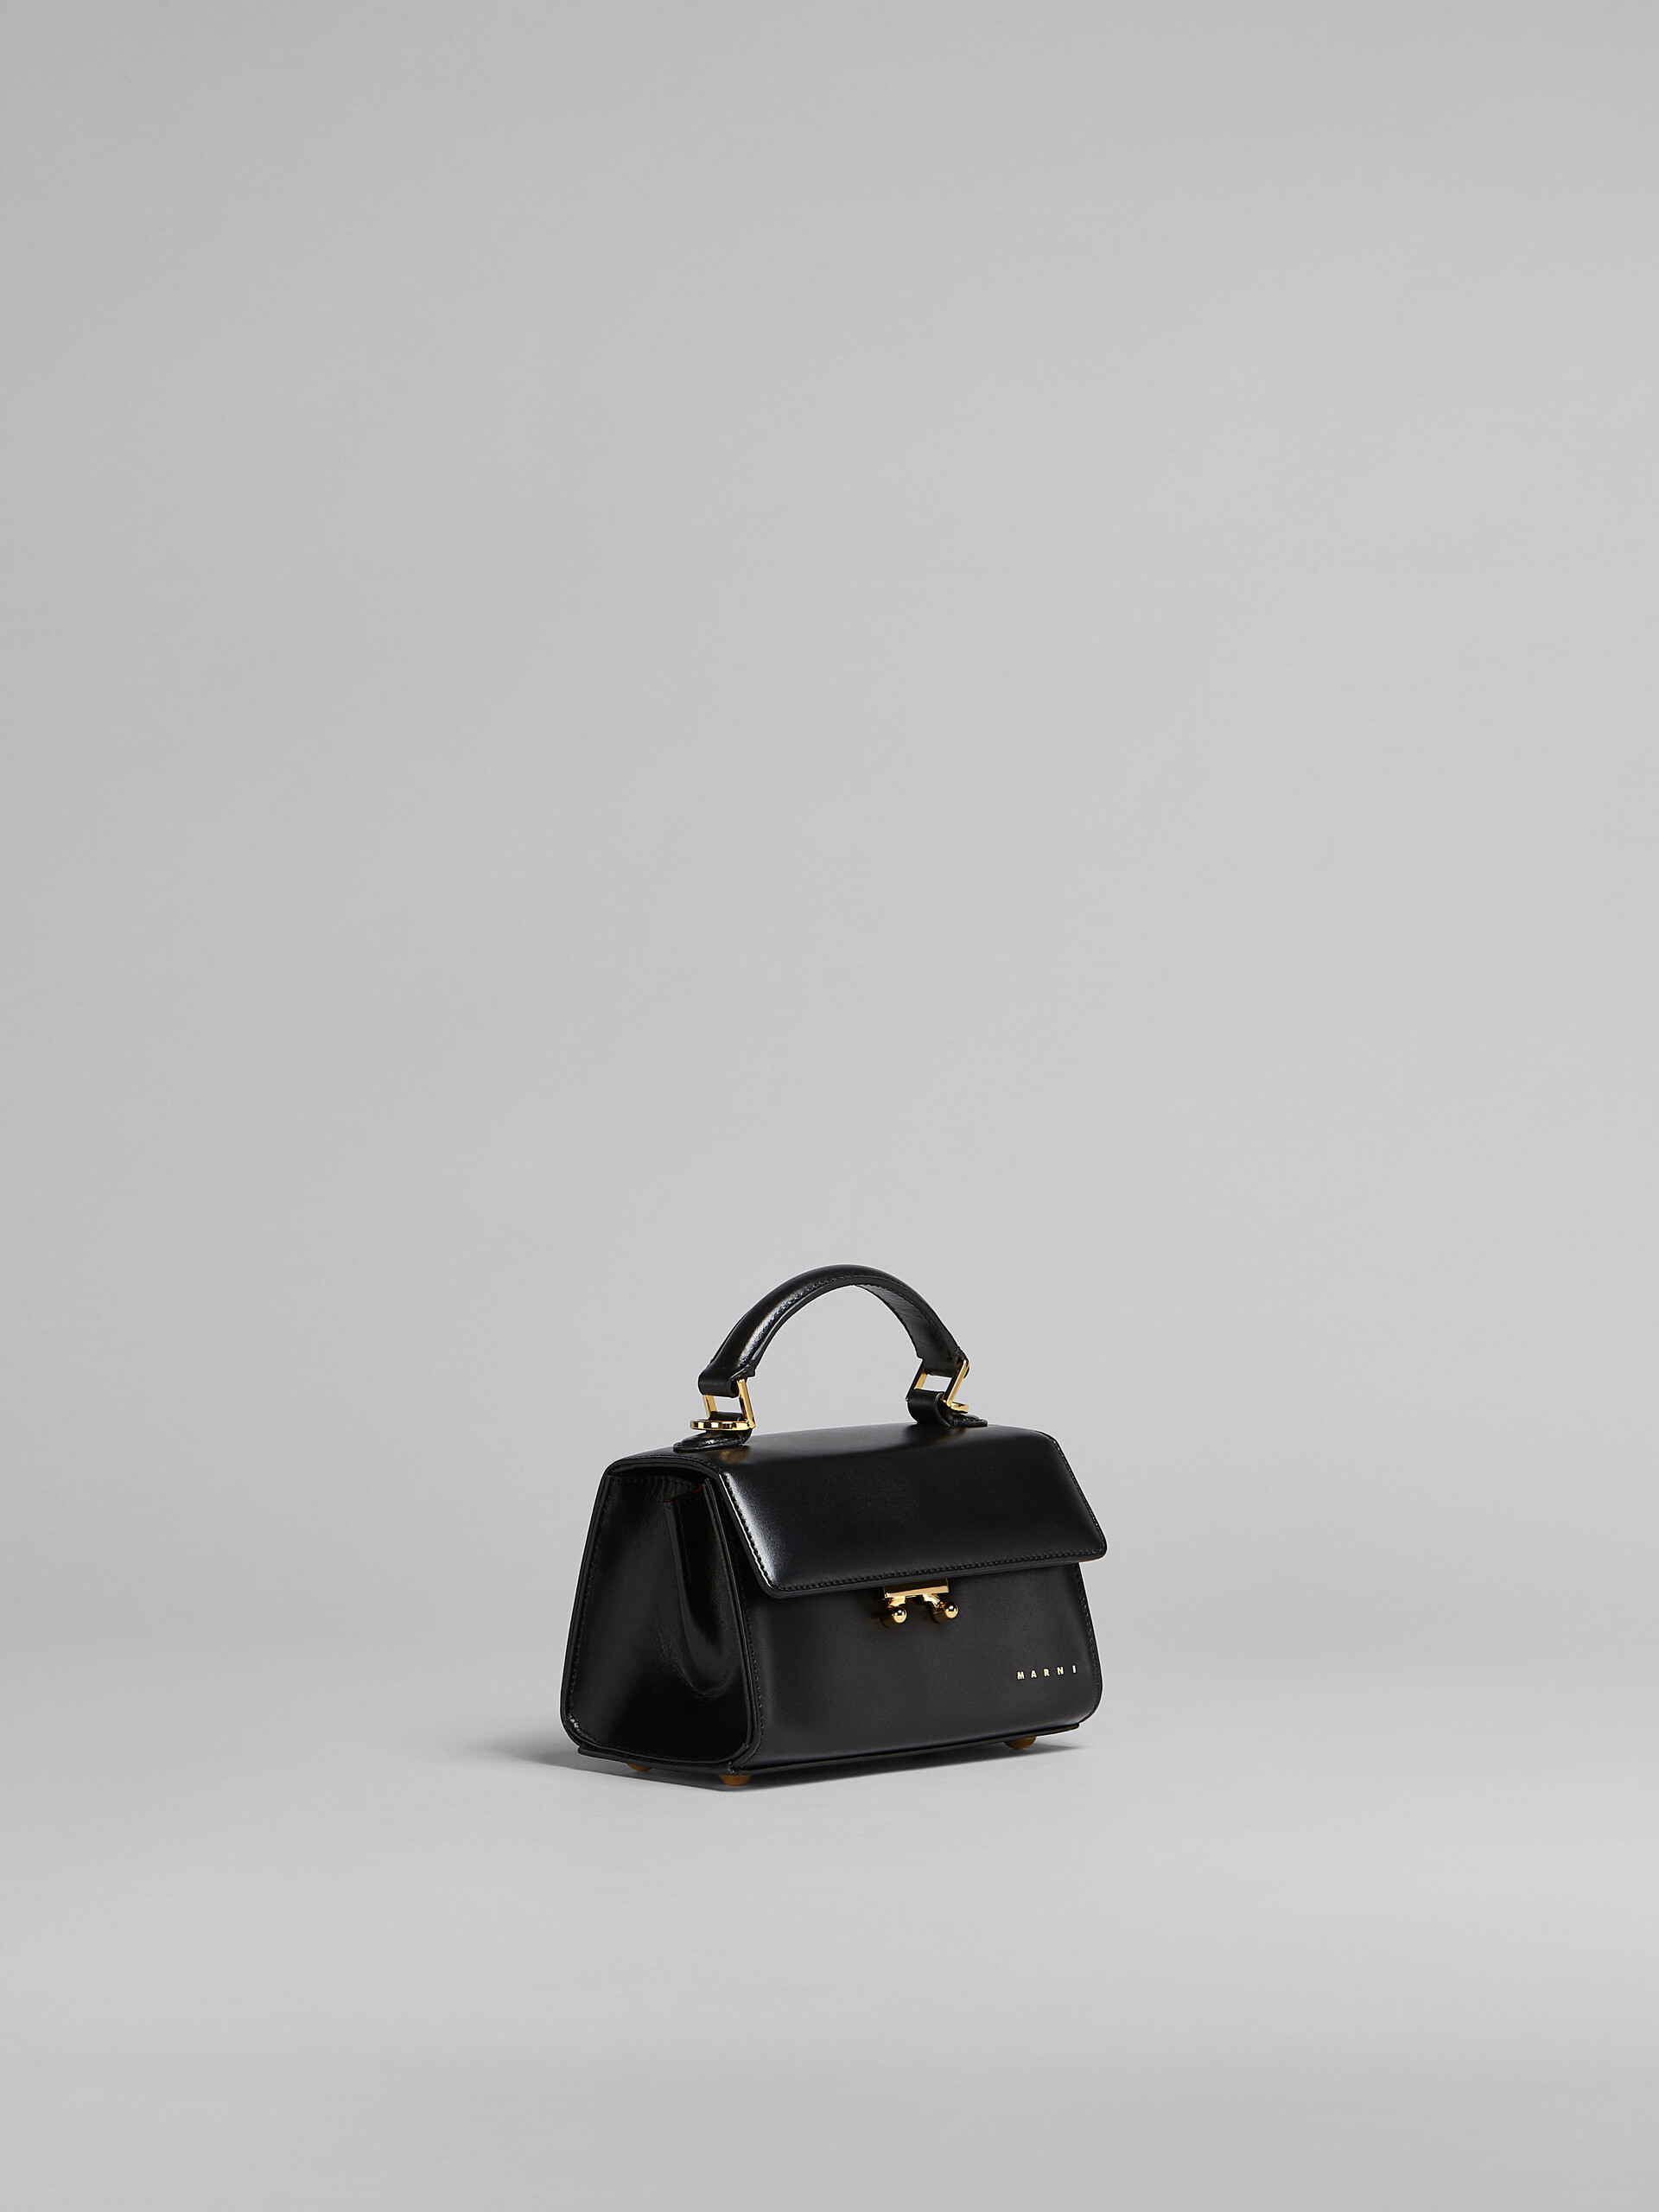 Relativity Mini Bag in black leather - Handbag - Image 6